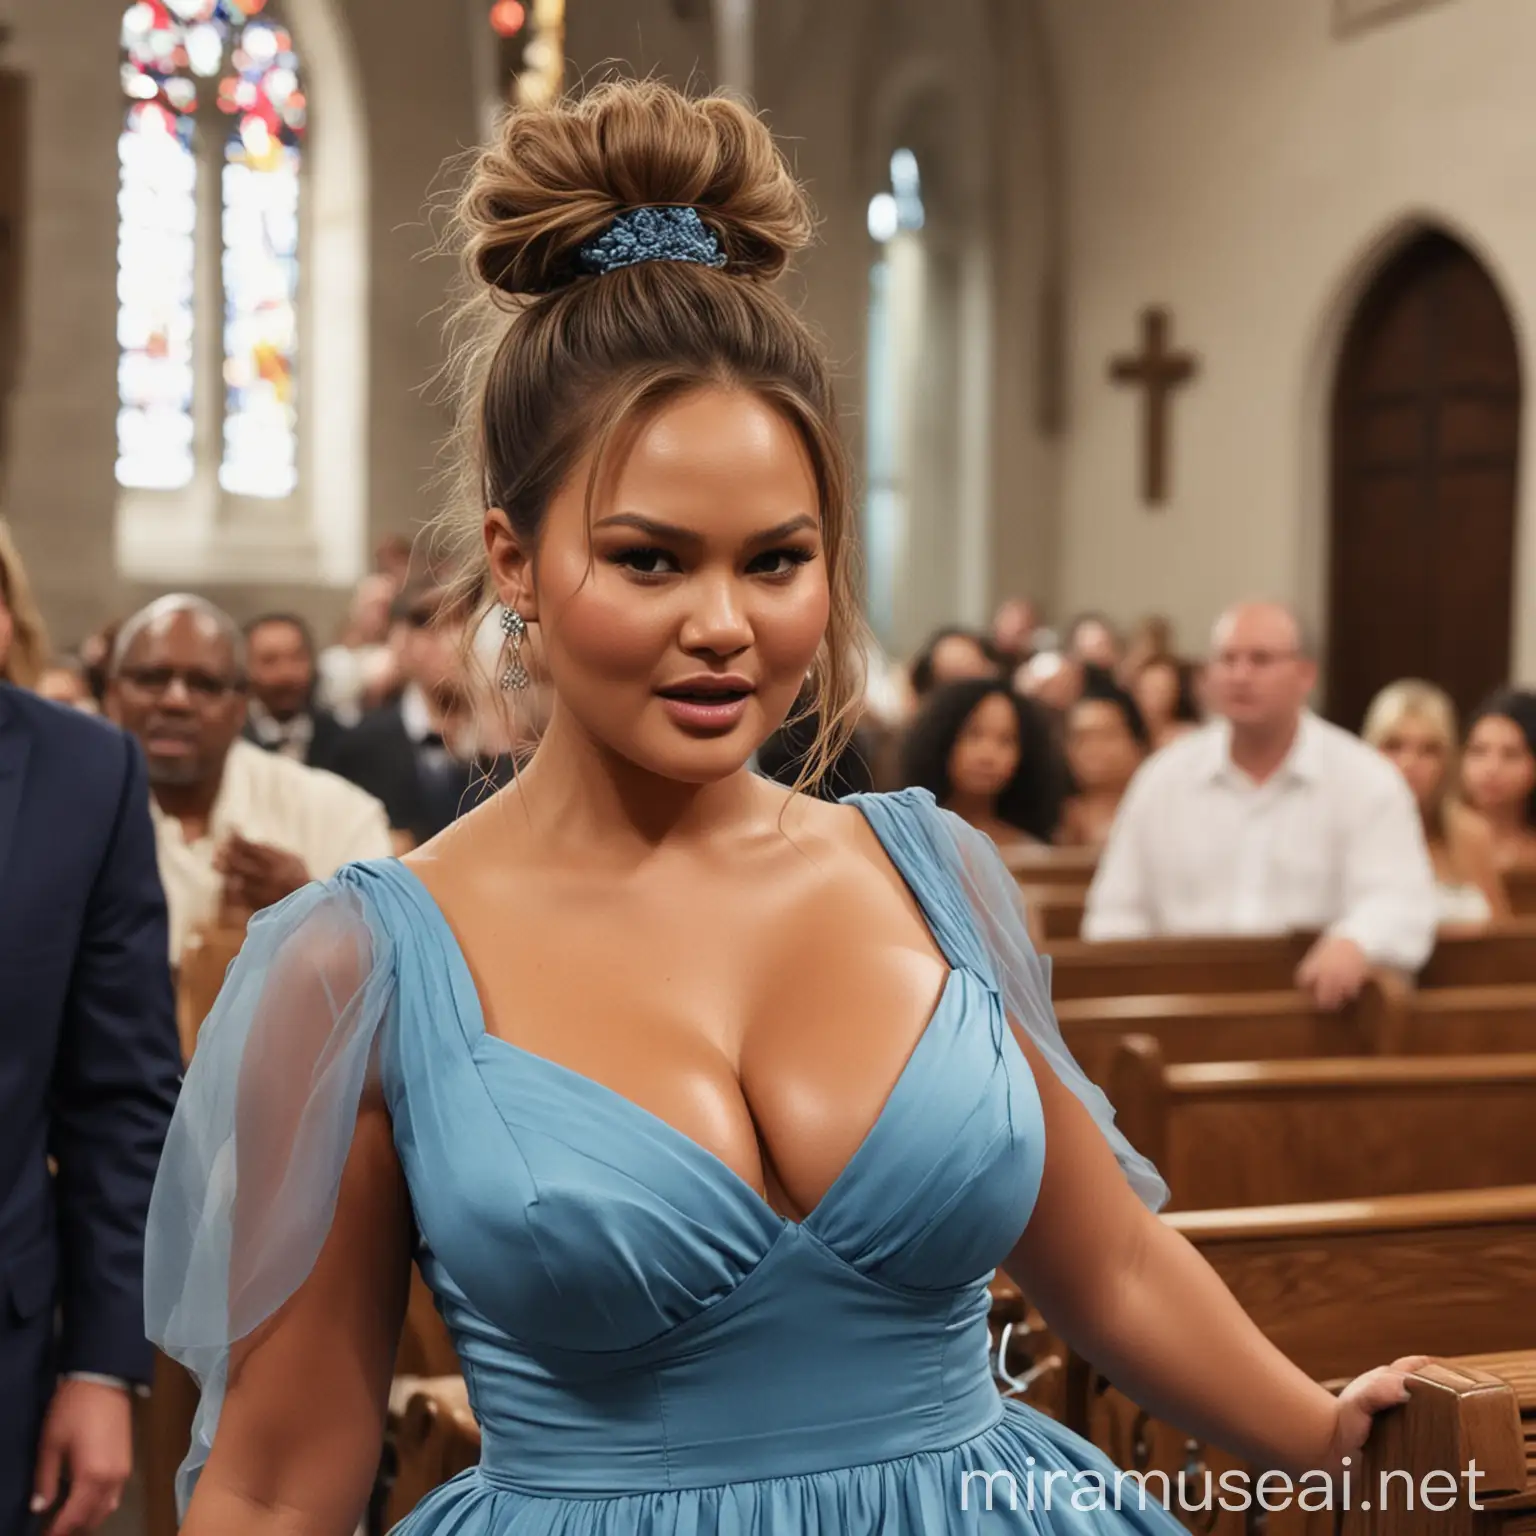 Chrissy Teigen Stunning in Blue Bridesmaid Dress at Church Ceremony